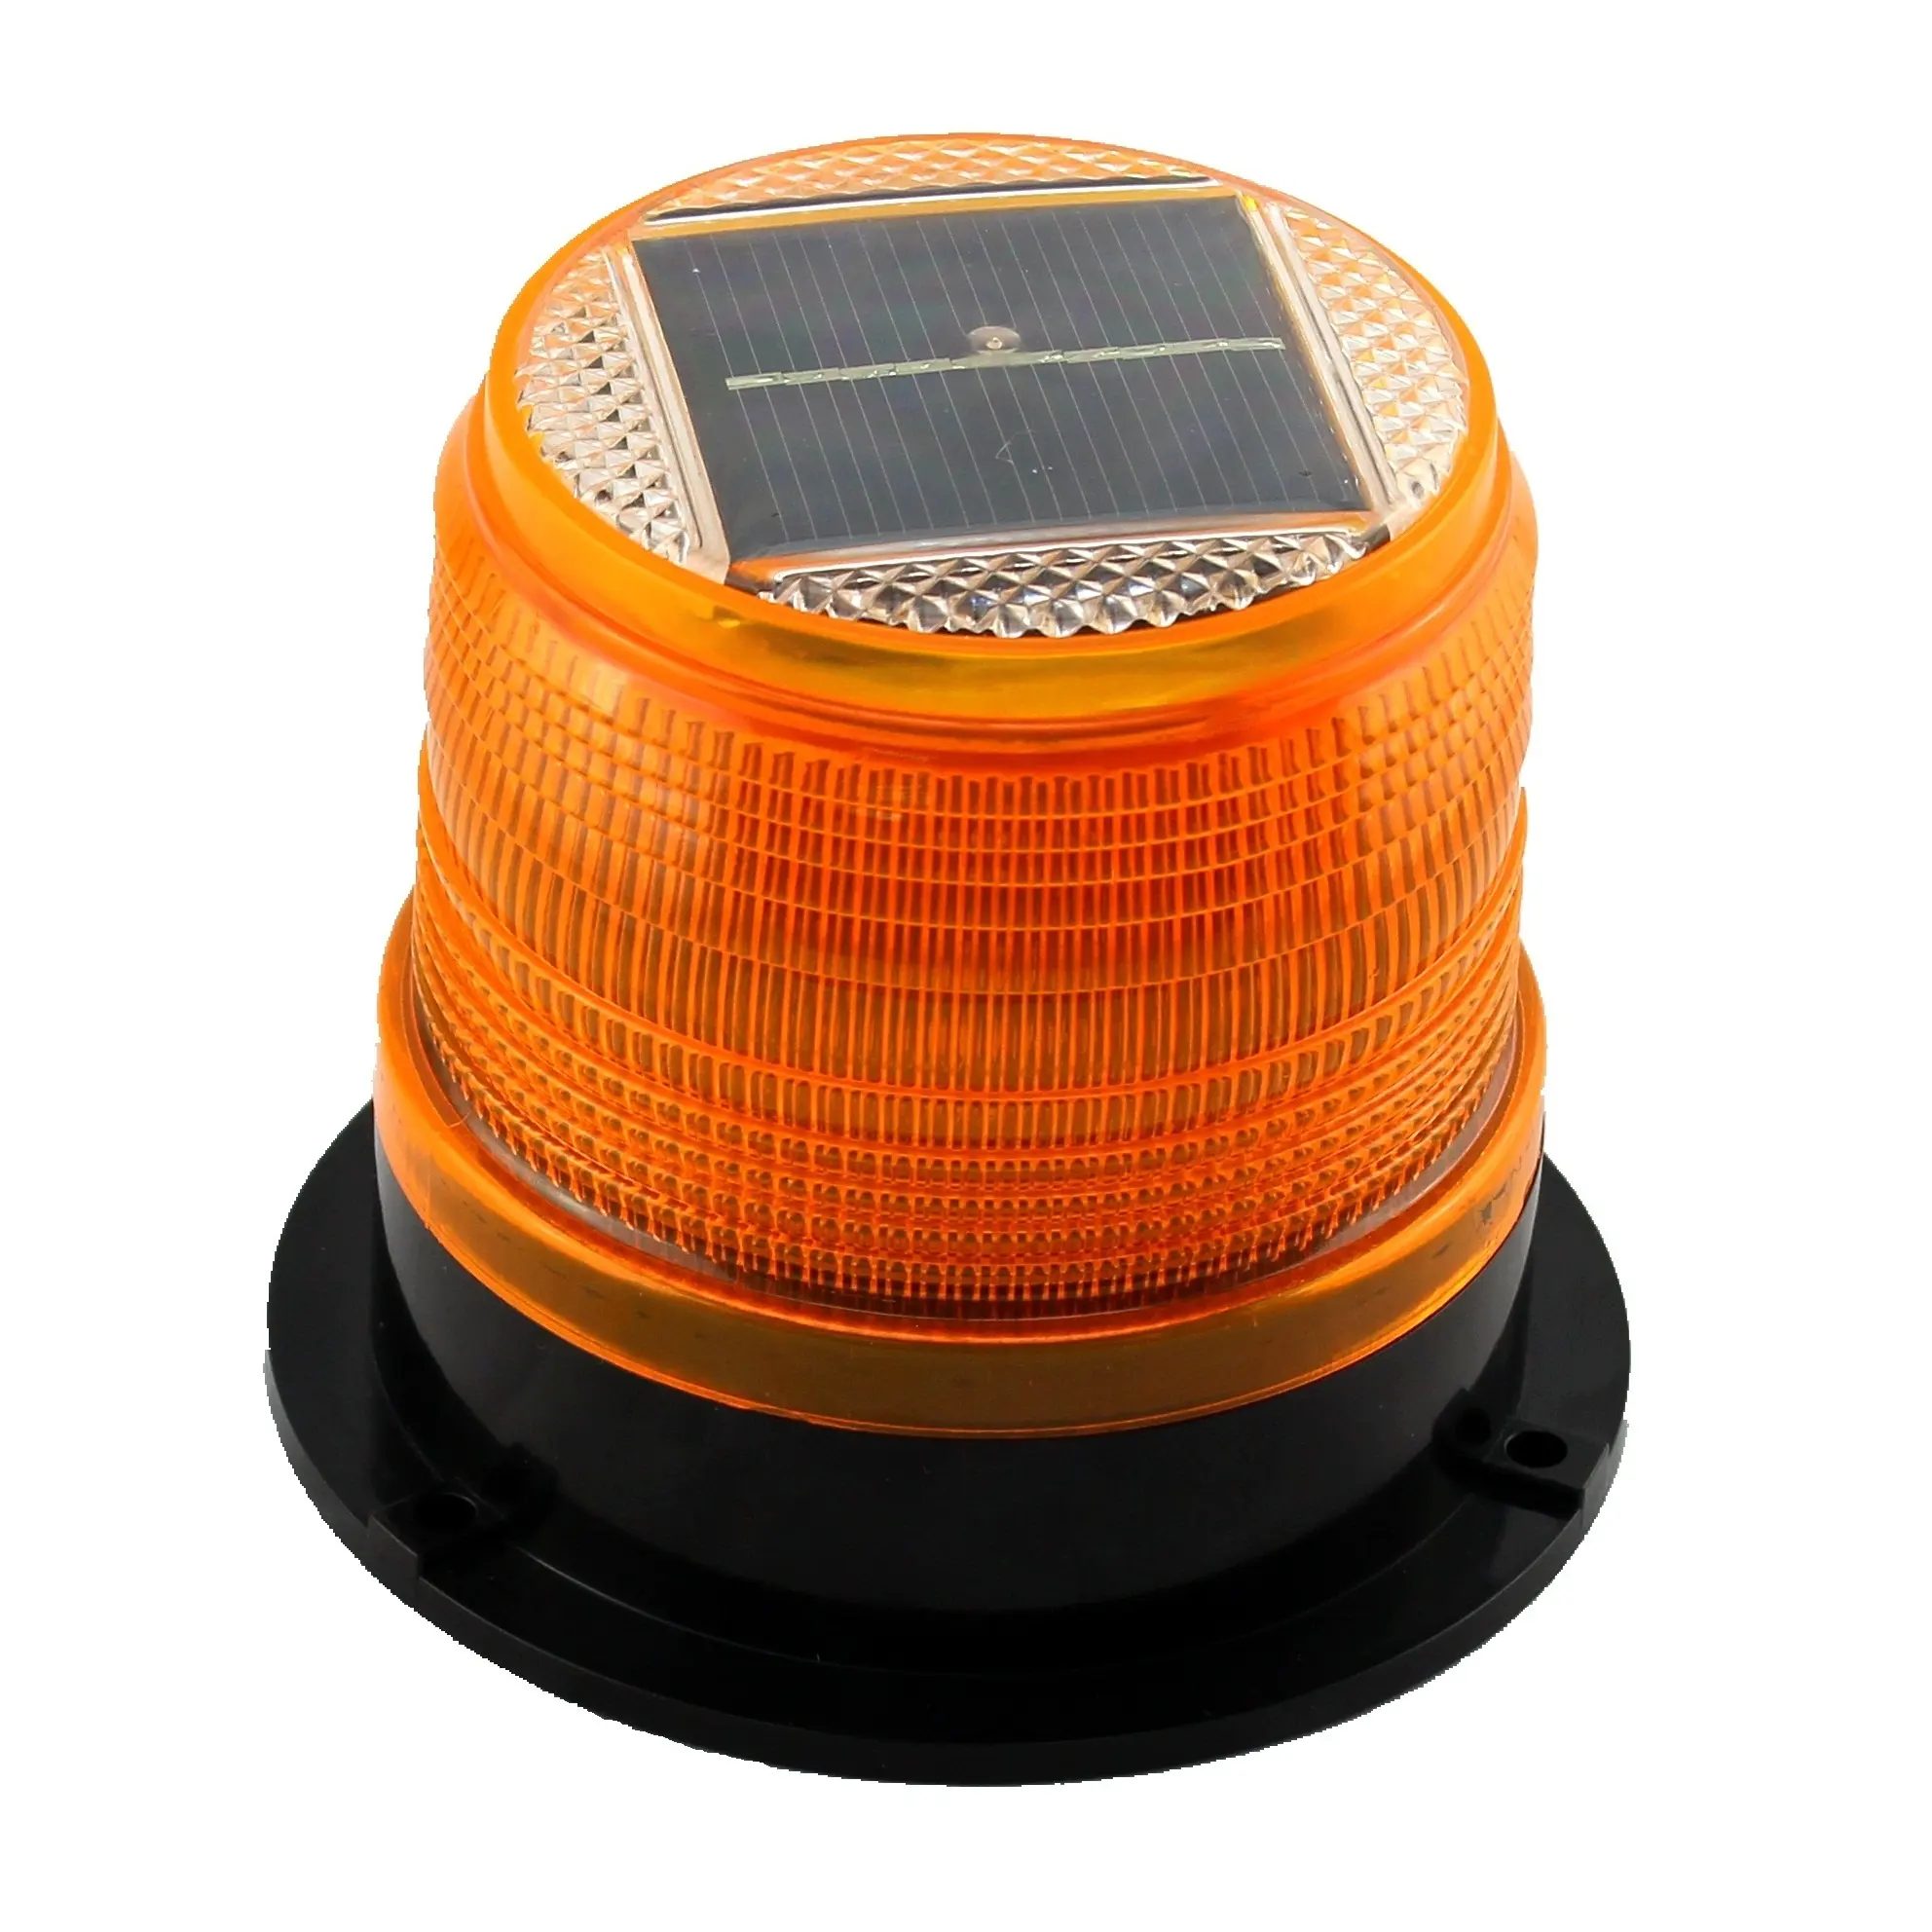 TOP LEAD Amber Emergency Solar Beacon LED Warning Light Magnetic Traffic flashing Strobe Lamp